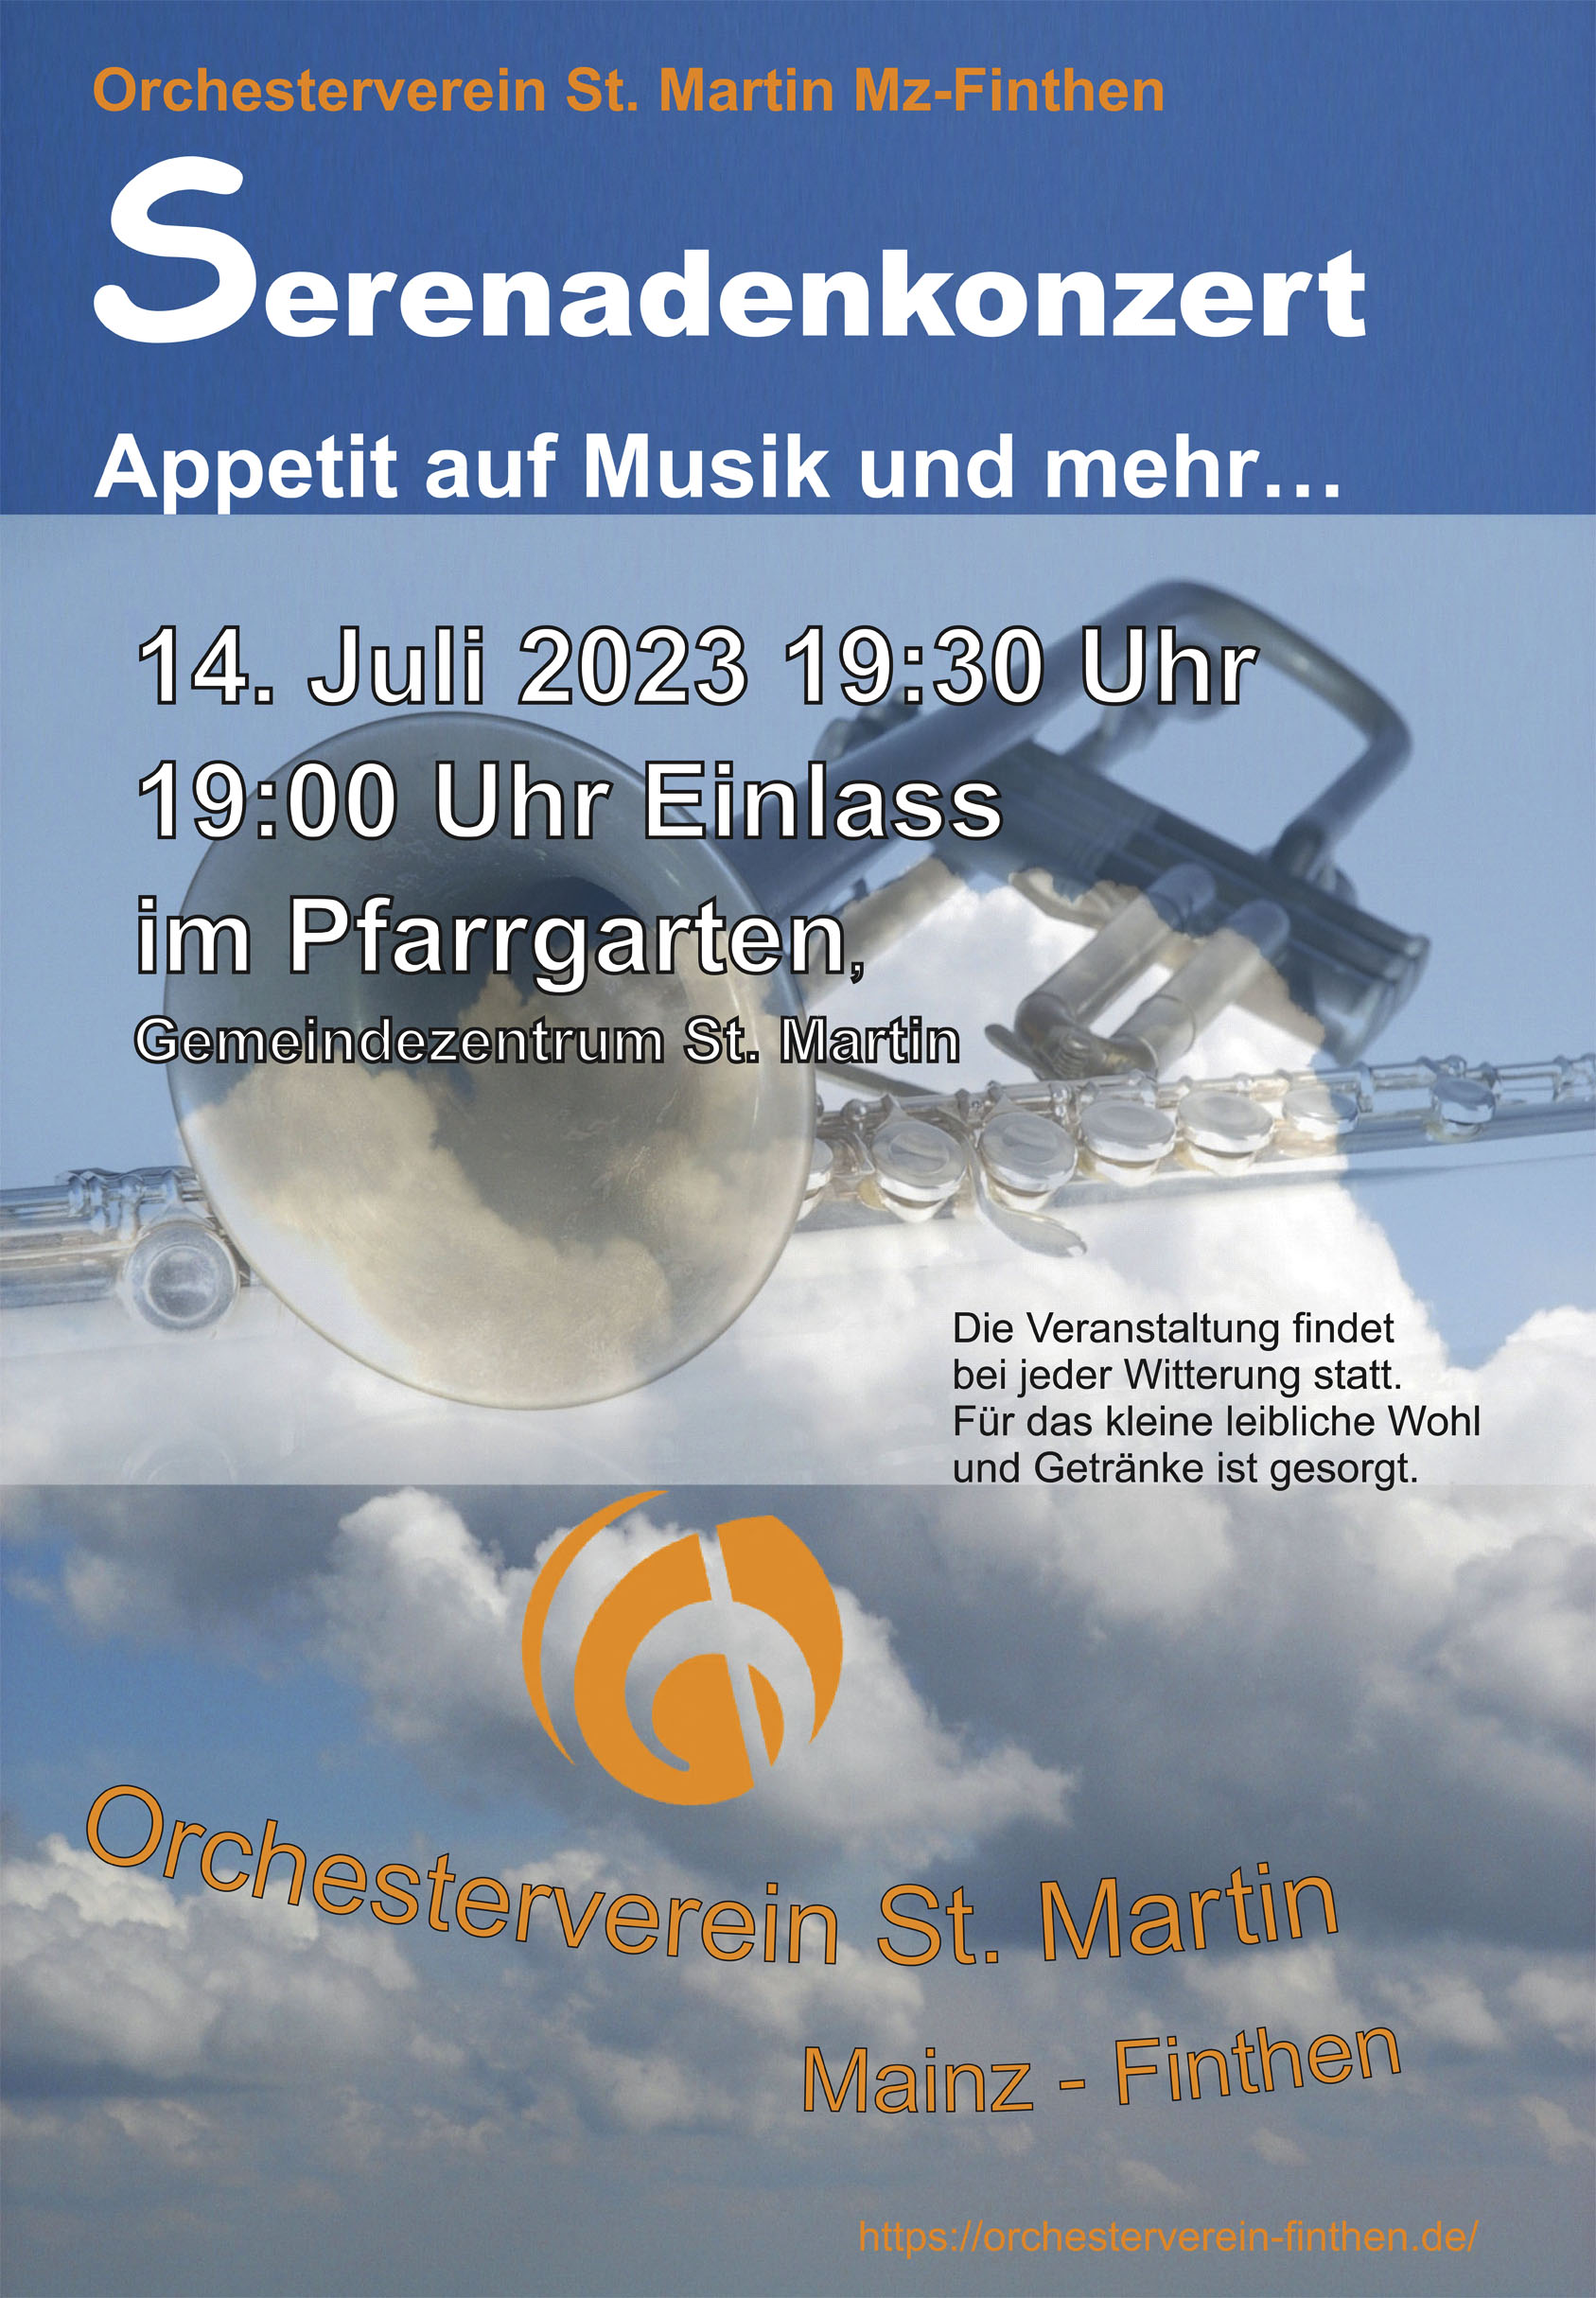 Plakat-Serenadenkonzert (c) OrchestervereinSt. Martin